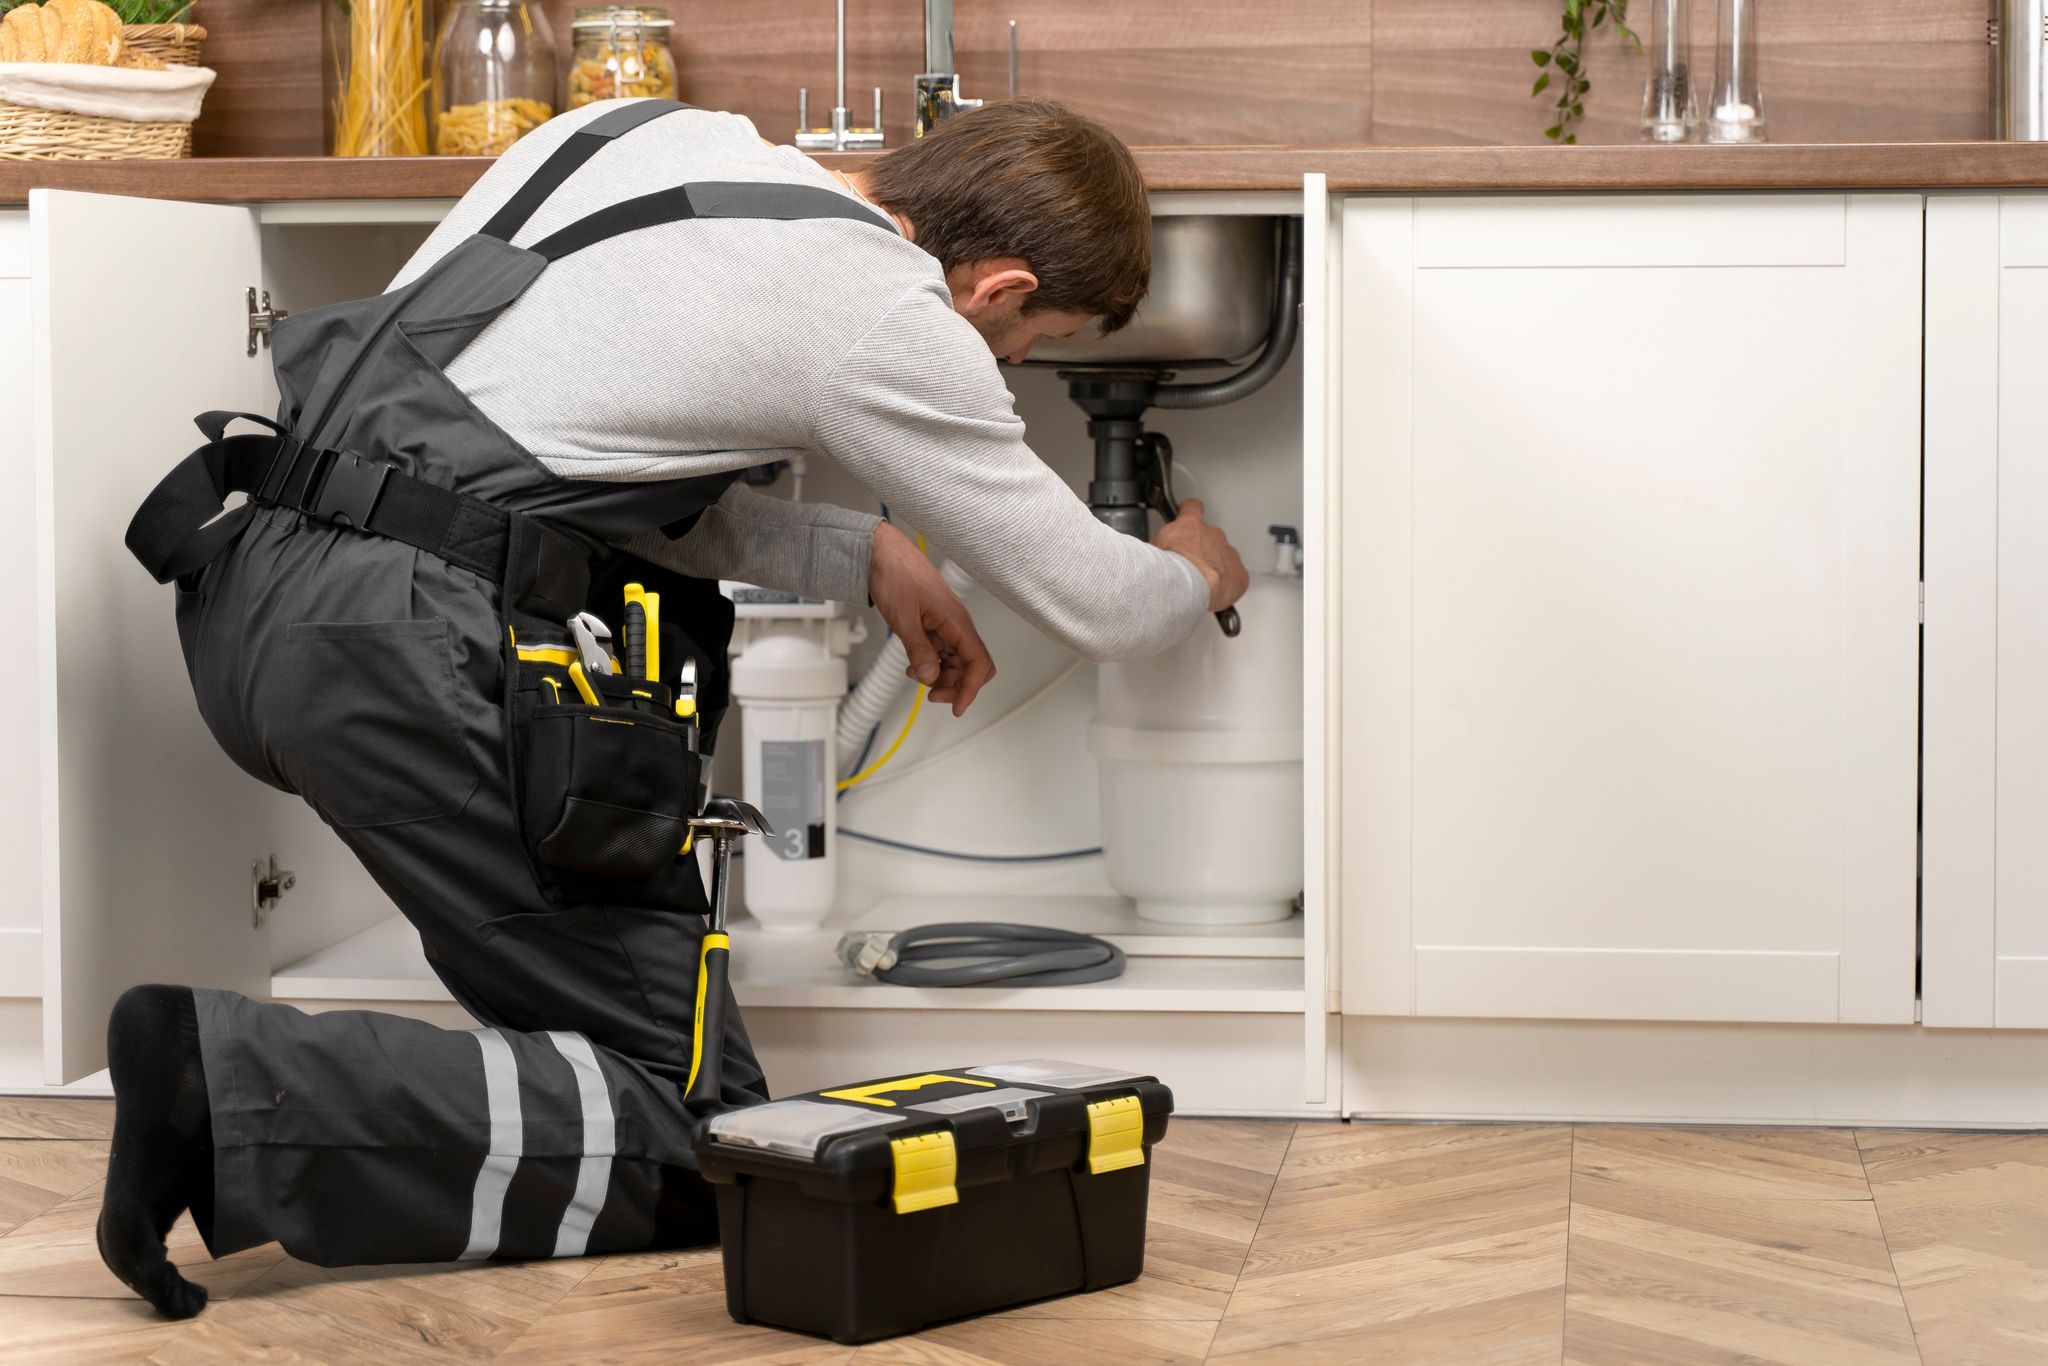 Handyman fixing plumbing issues as part of the regular property maintenance.